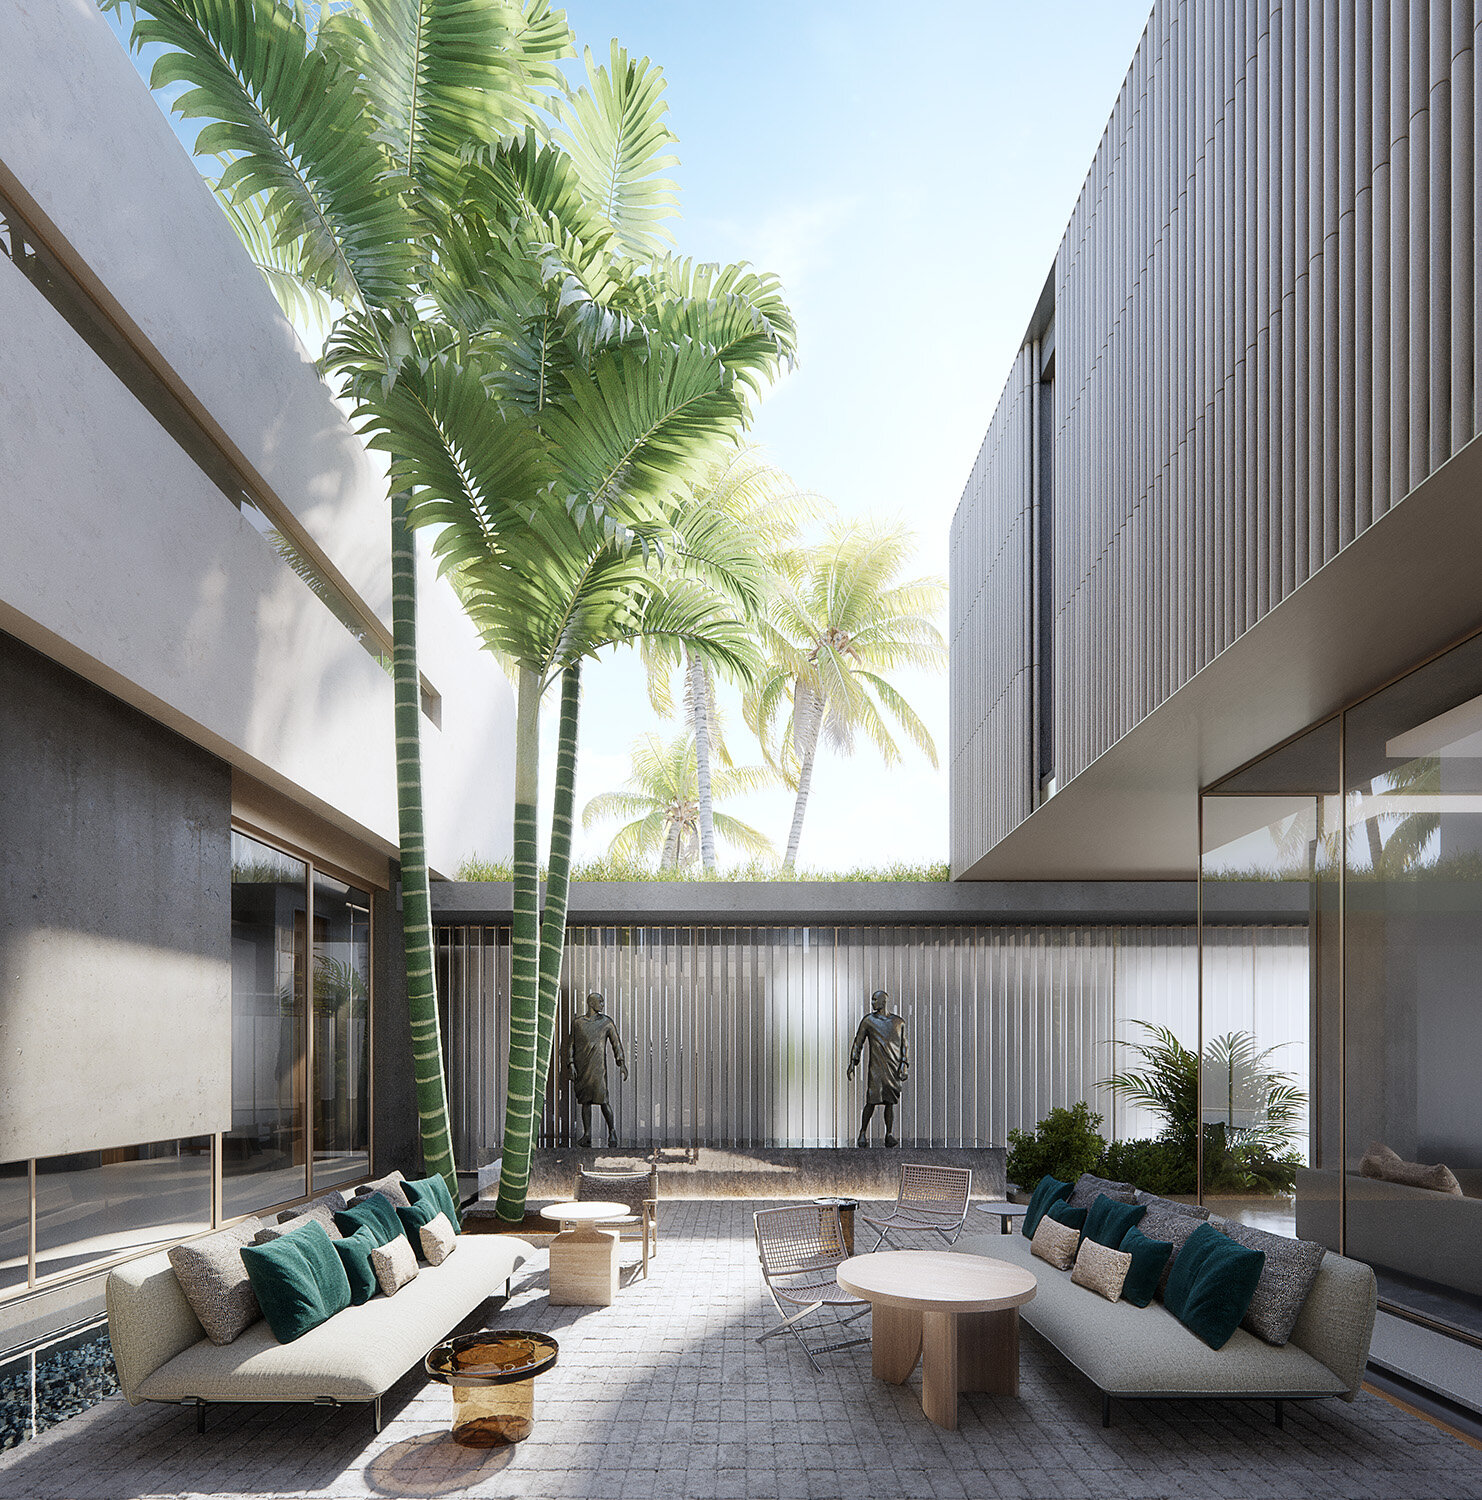  KoDA Sunset Villa Miami Beach Residence - 3D Rendering by Azeez Bakare Studios  